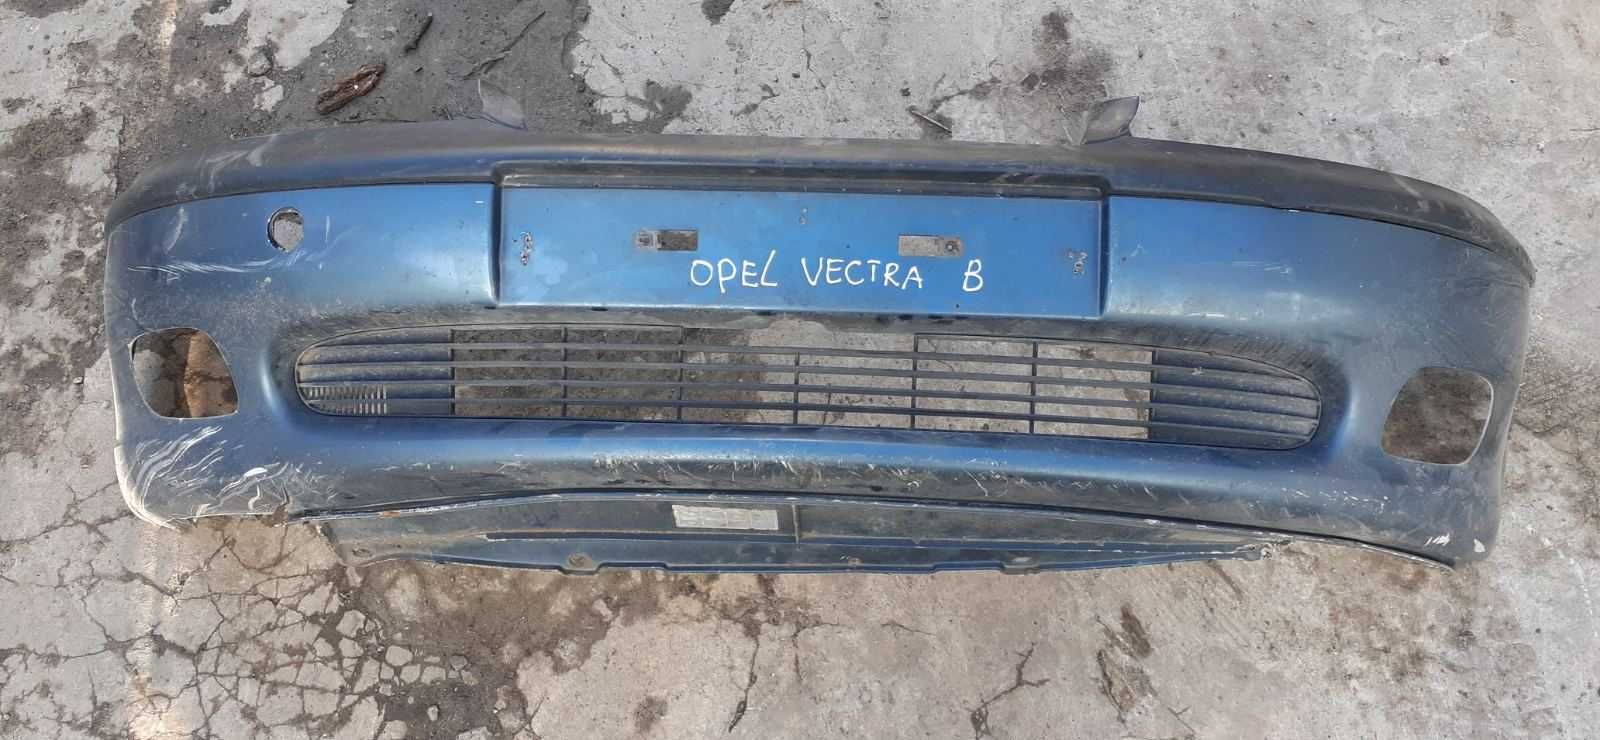 Opel Vectra B  С Европы после ДТП